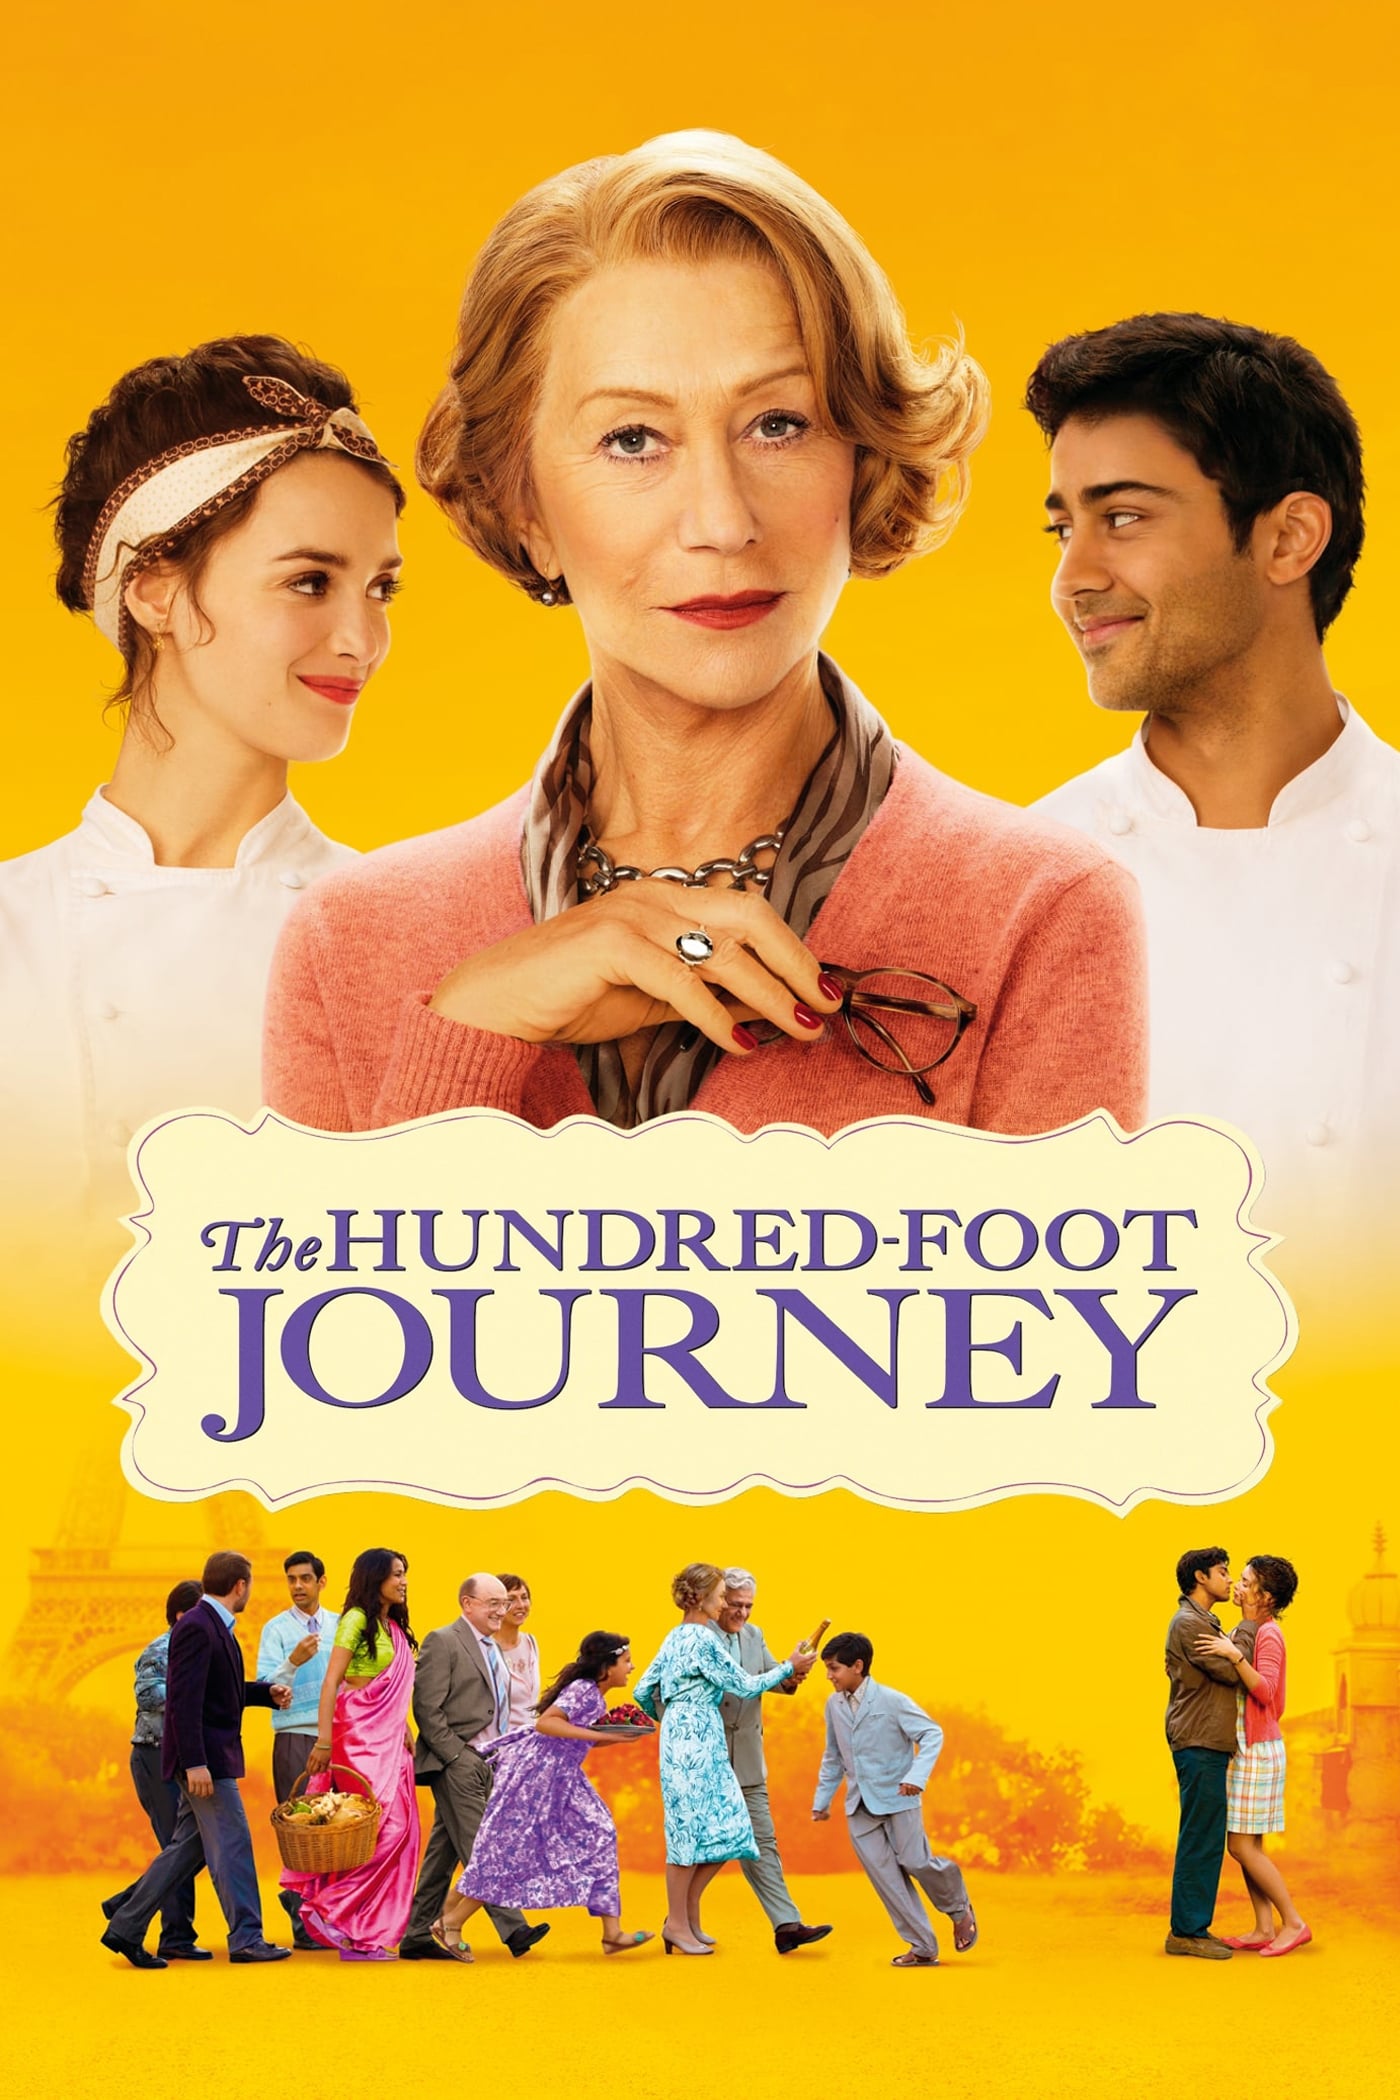 the hundred foot journey (2014) online subtitrat